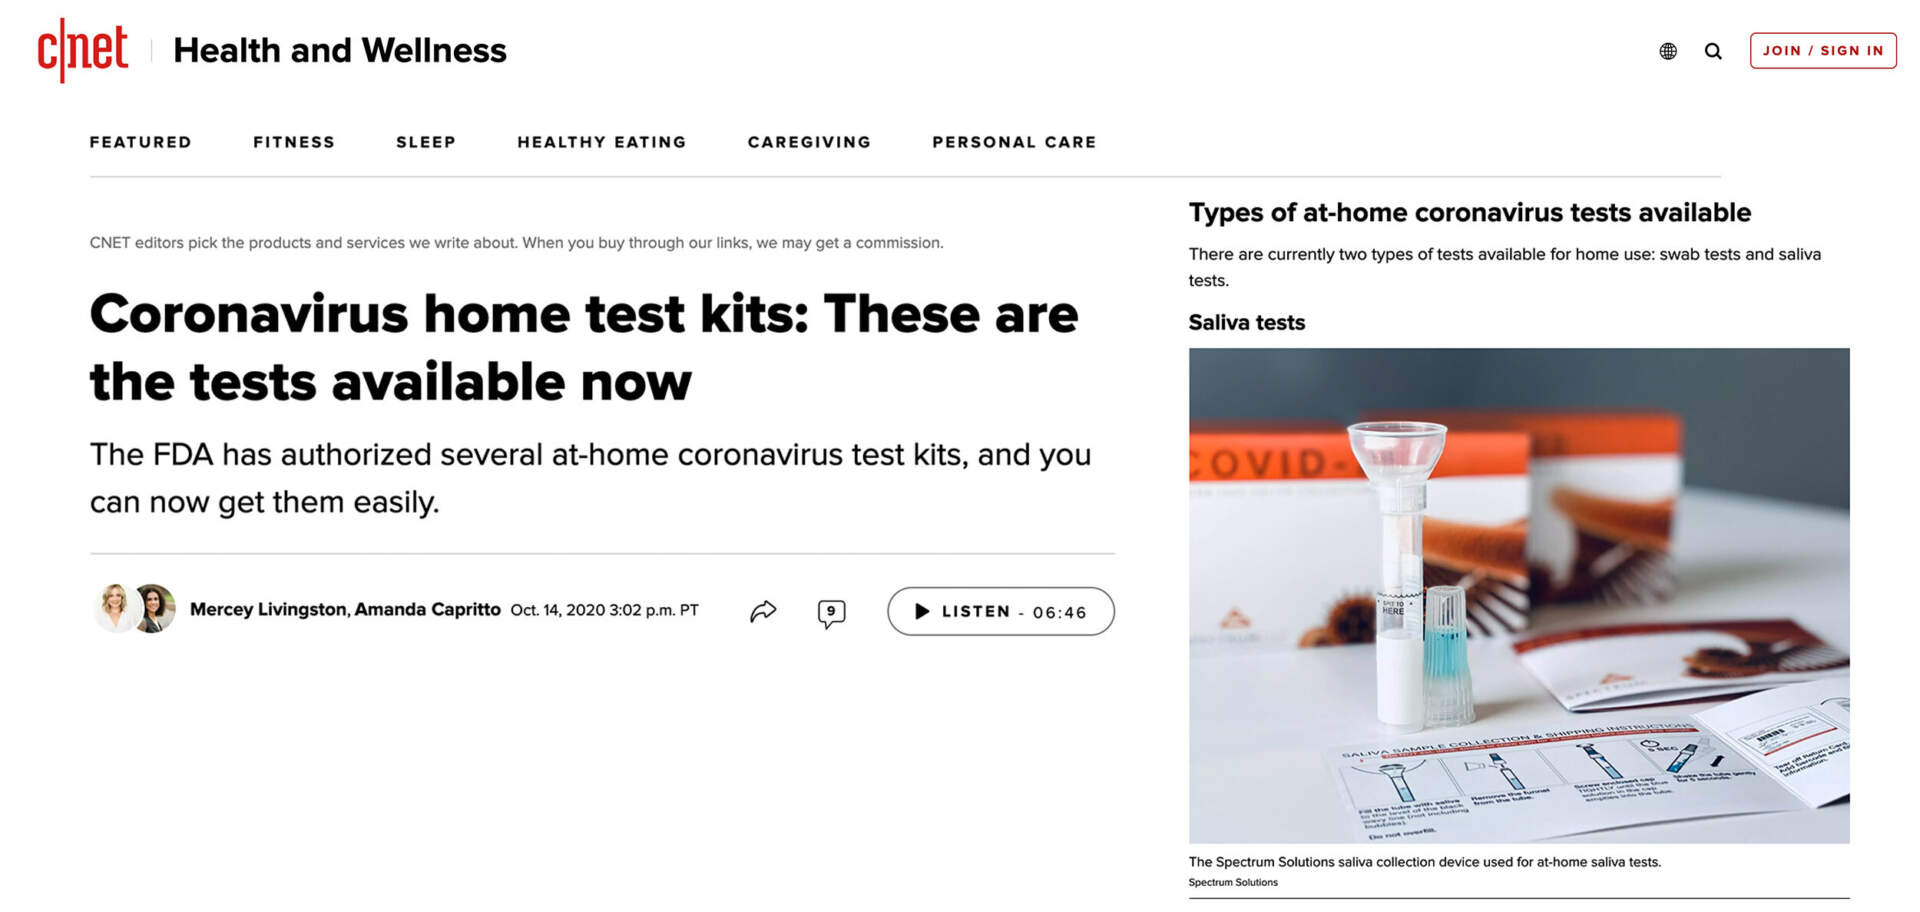 CNET-Coronavirus Home Test Kits-Spectrum Solutions